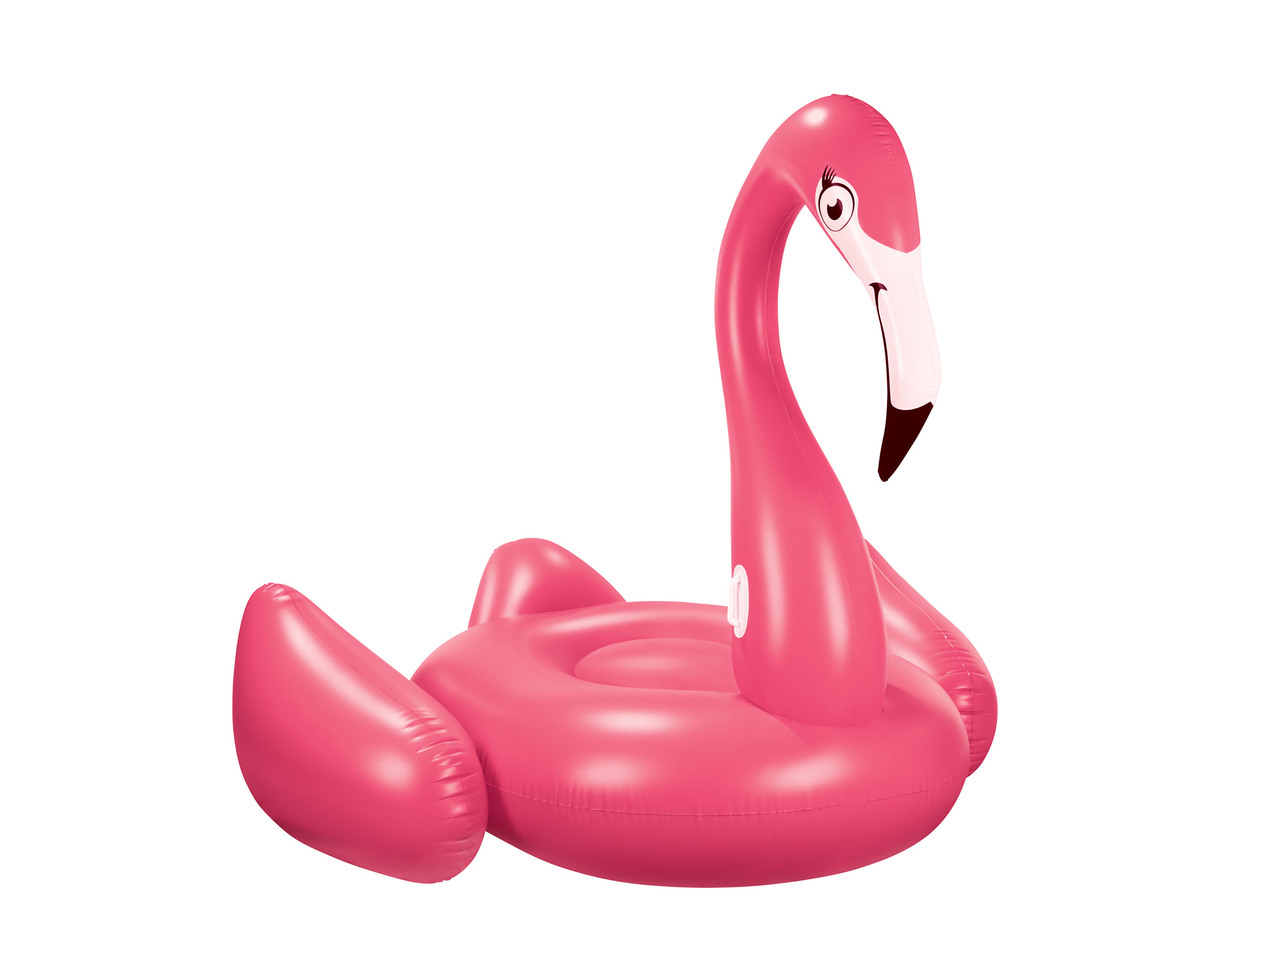 Flamingo/Unicórnio Insuflável